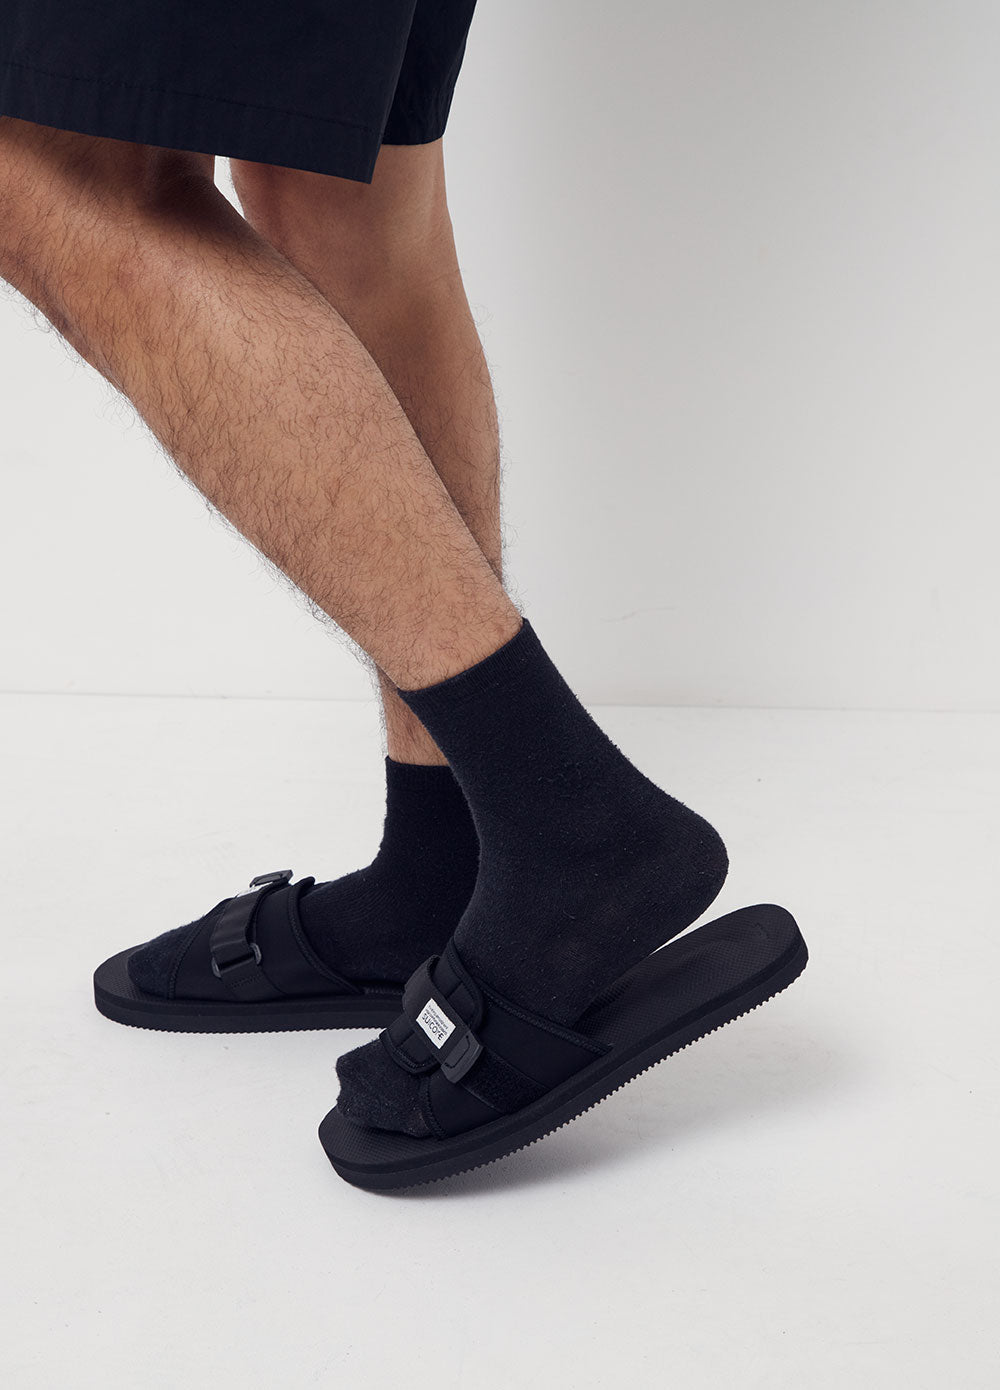 Men's Black Padri Sandals by Suicoke | Incu